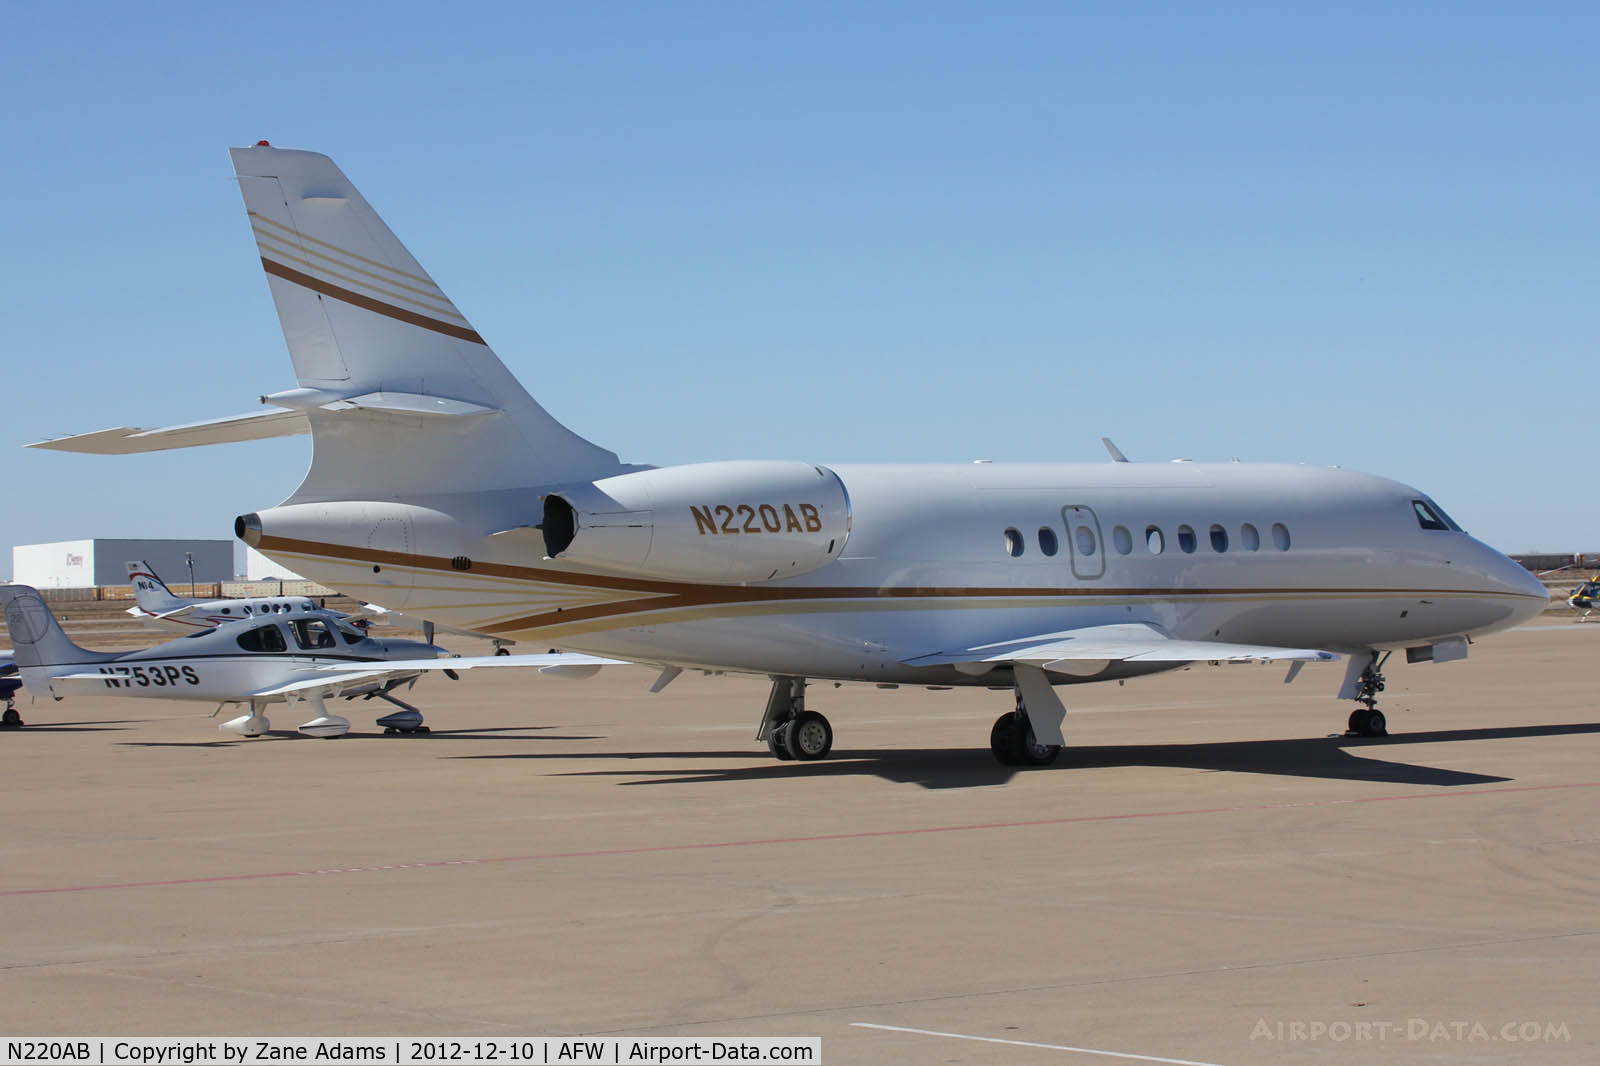 N220AB, 2001 Dassault Falcon 2000 C/N 170, At Alliance Airport - Fort Worth, TX